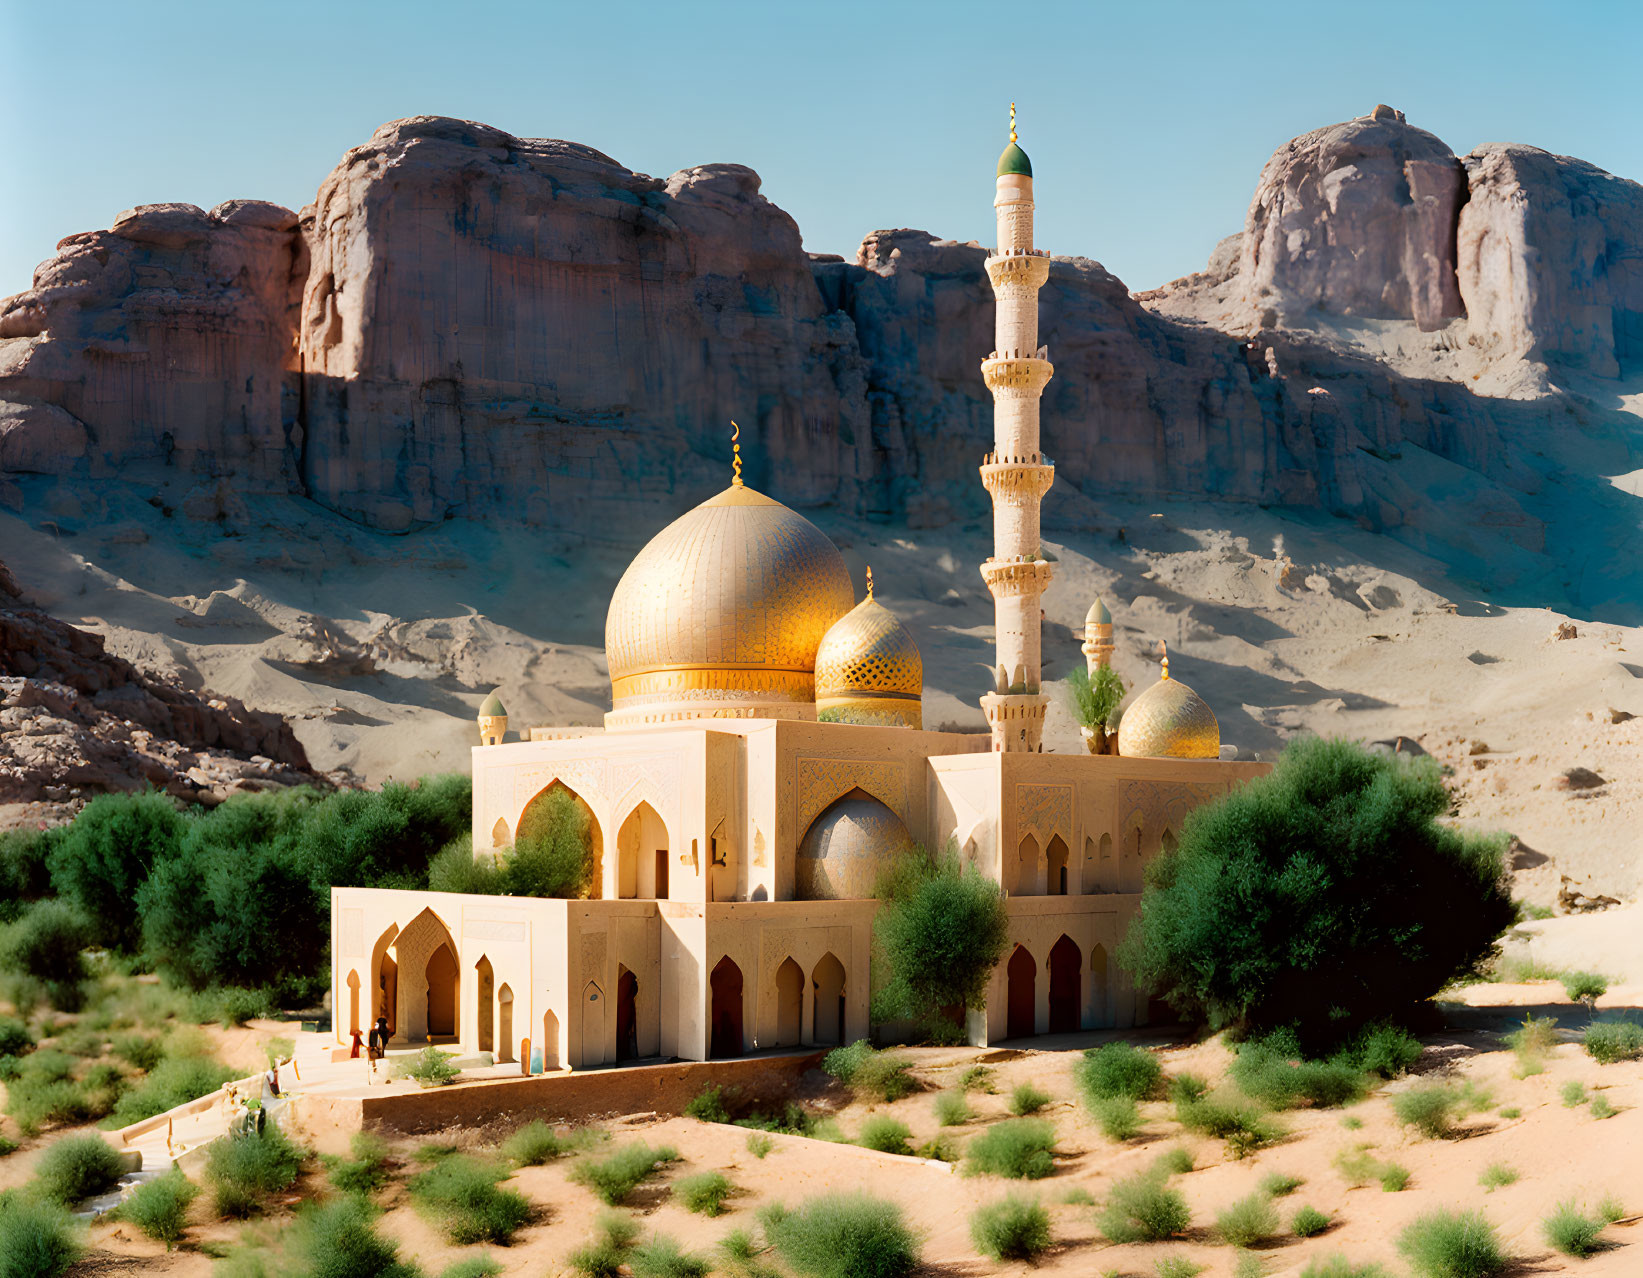 Golden dome and minaret mosque in desert cliffs landscape